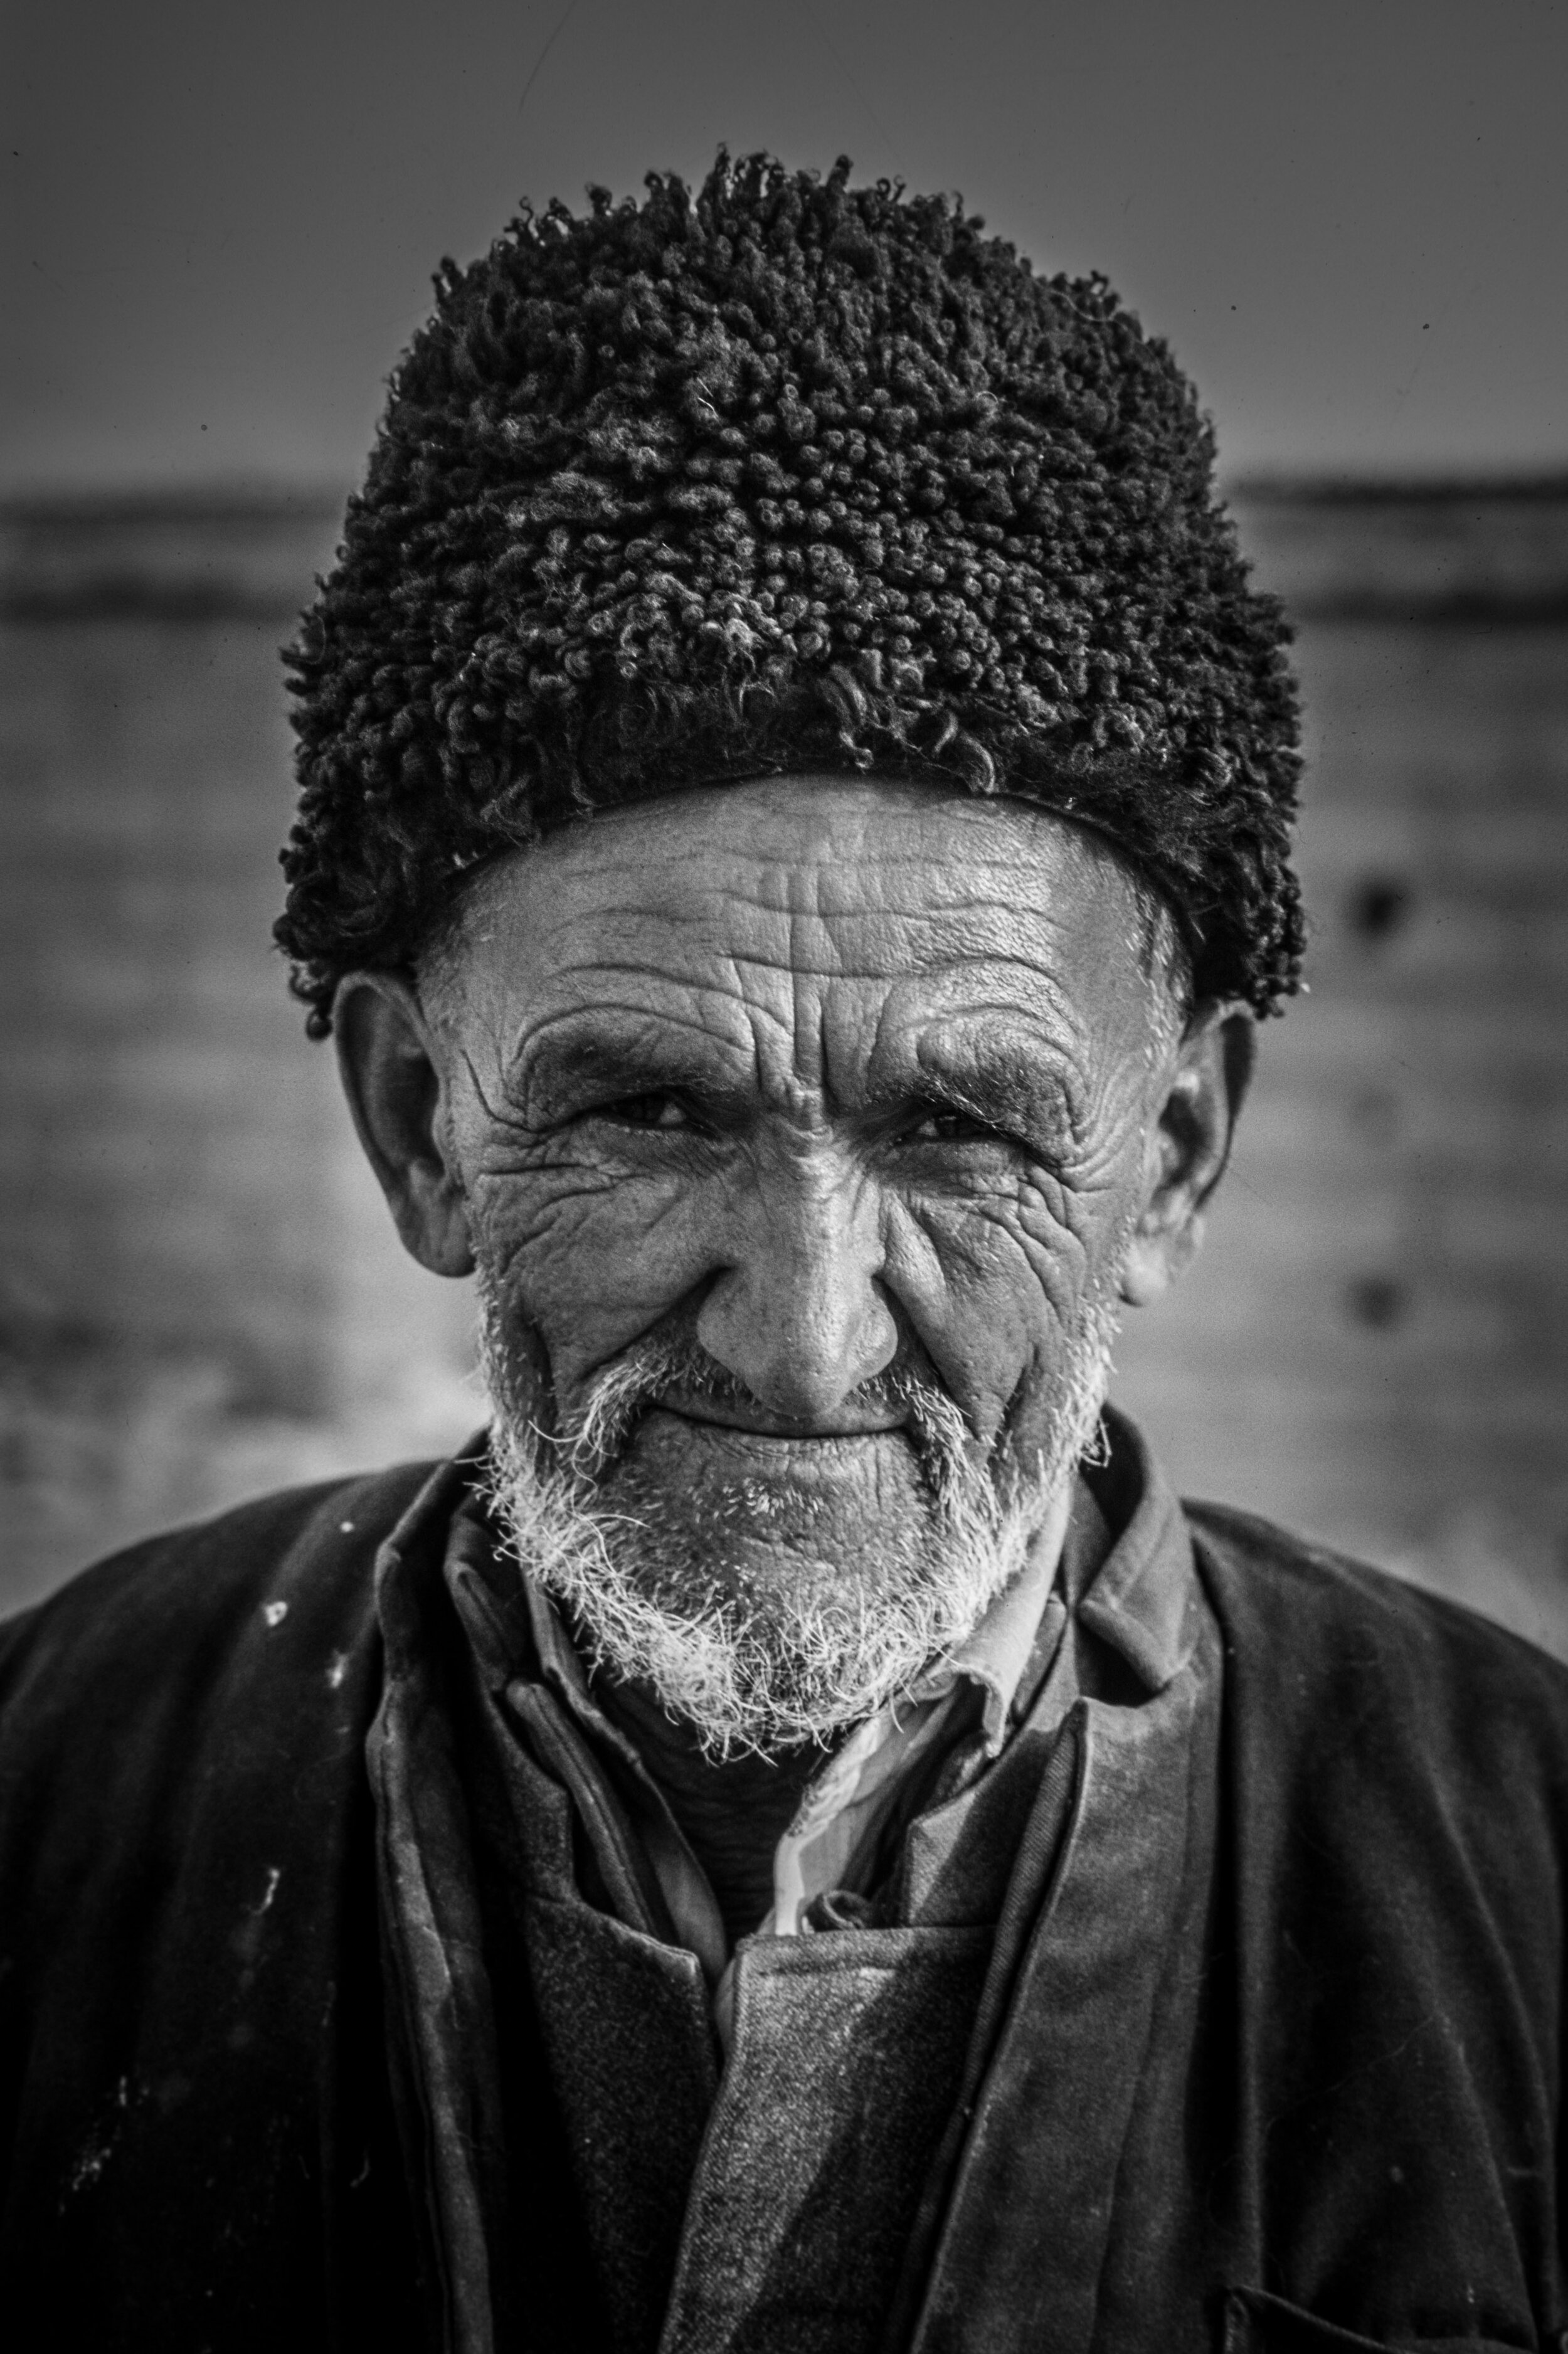  Portrait of a Uighur man.  